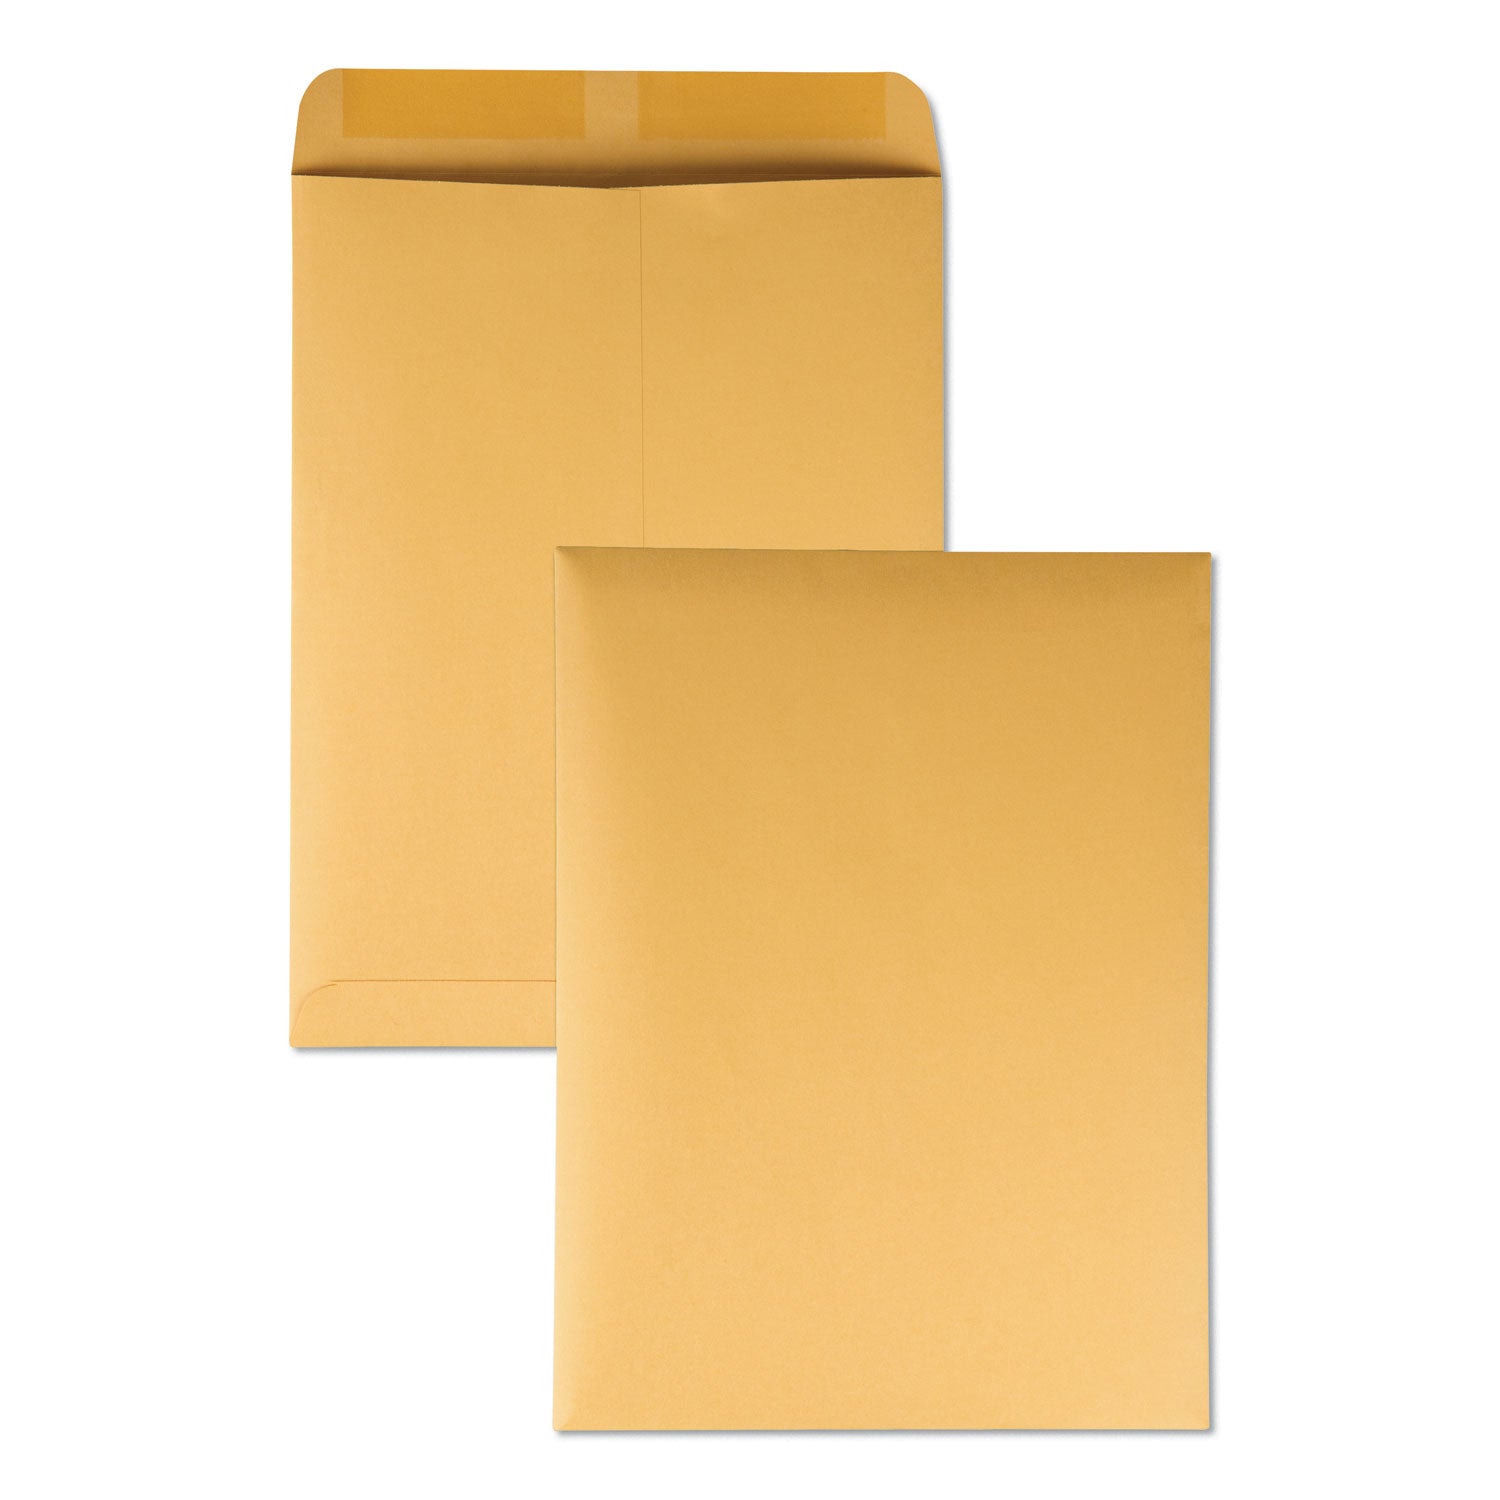 Catalog Envelope, 28 lb Bond Weight Kraft, #12 1/2, Square Flap, Gummed Closure, 9.5 x 12.5, Brown Kraft, 250/Box - 